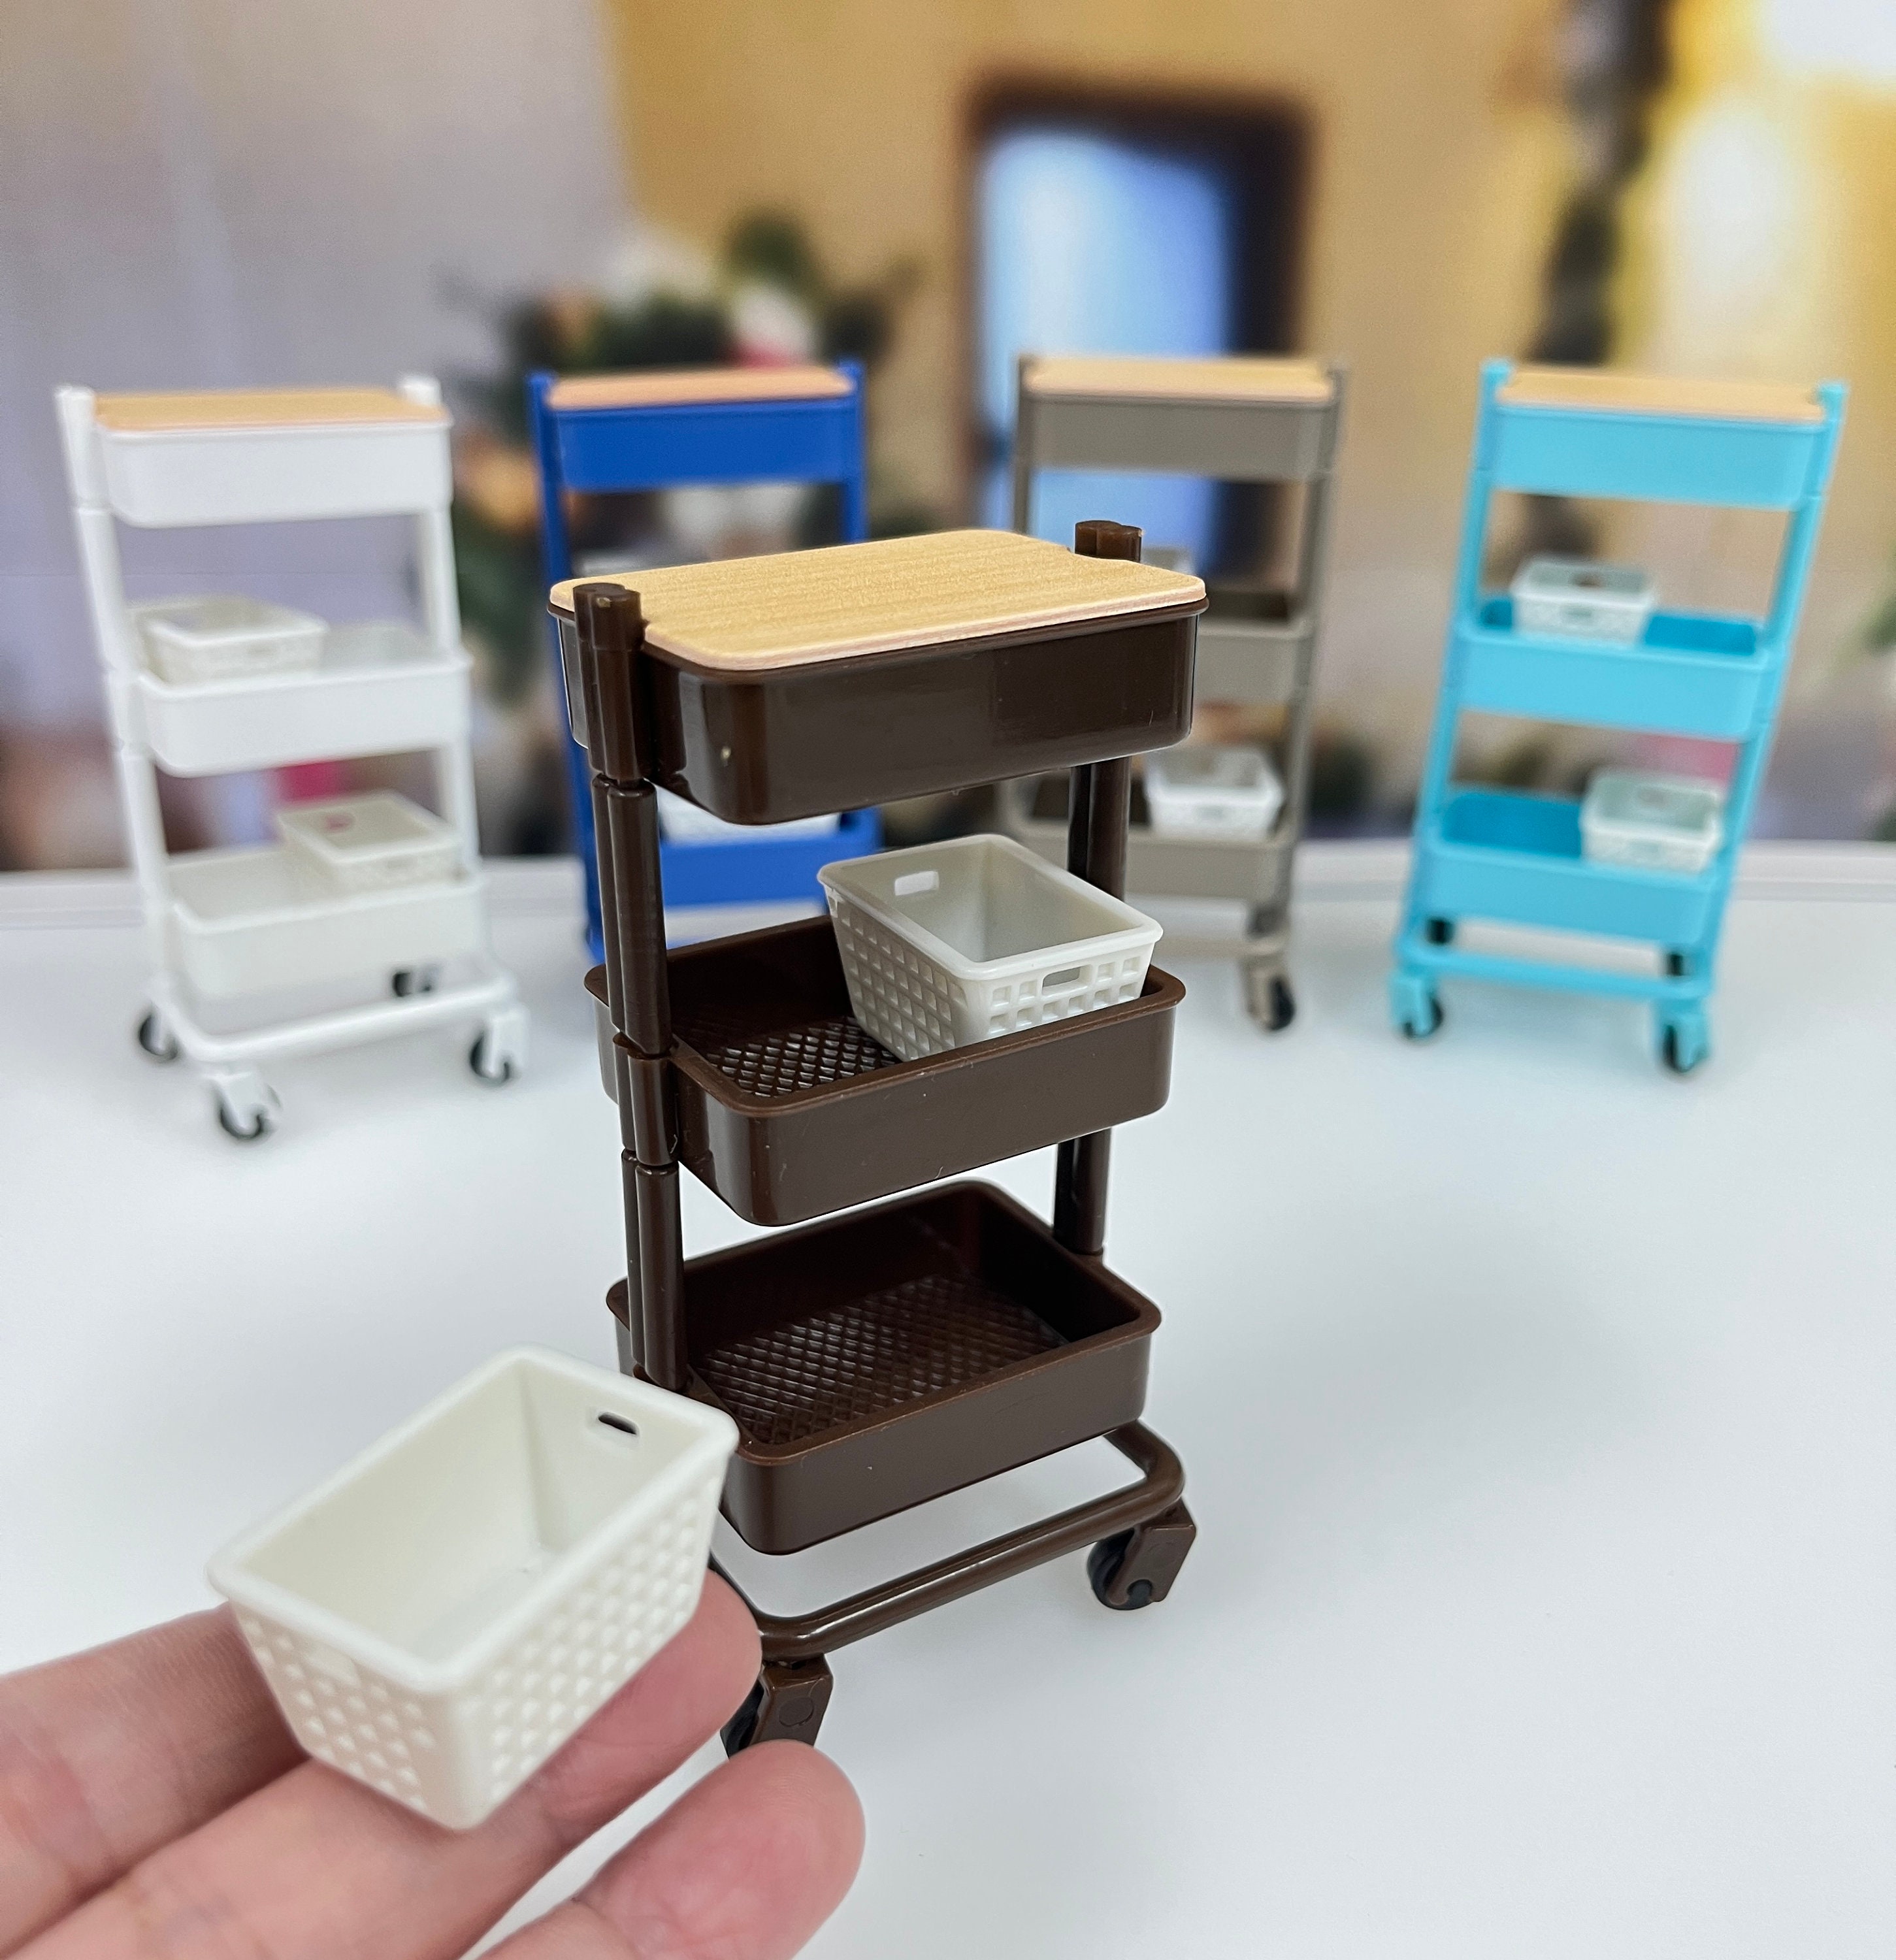 Miniature Storage Basket Set of 2pcs Miniature Trays Miniature